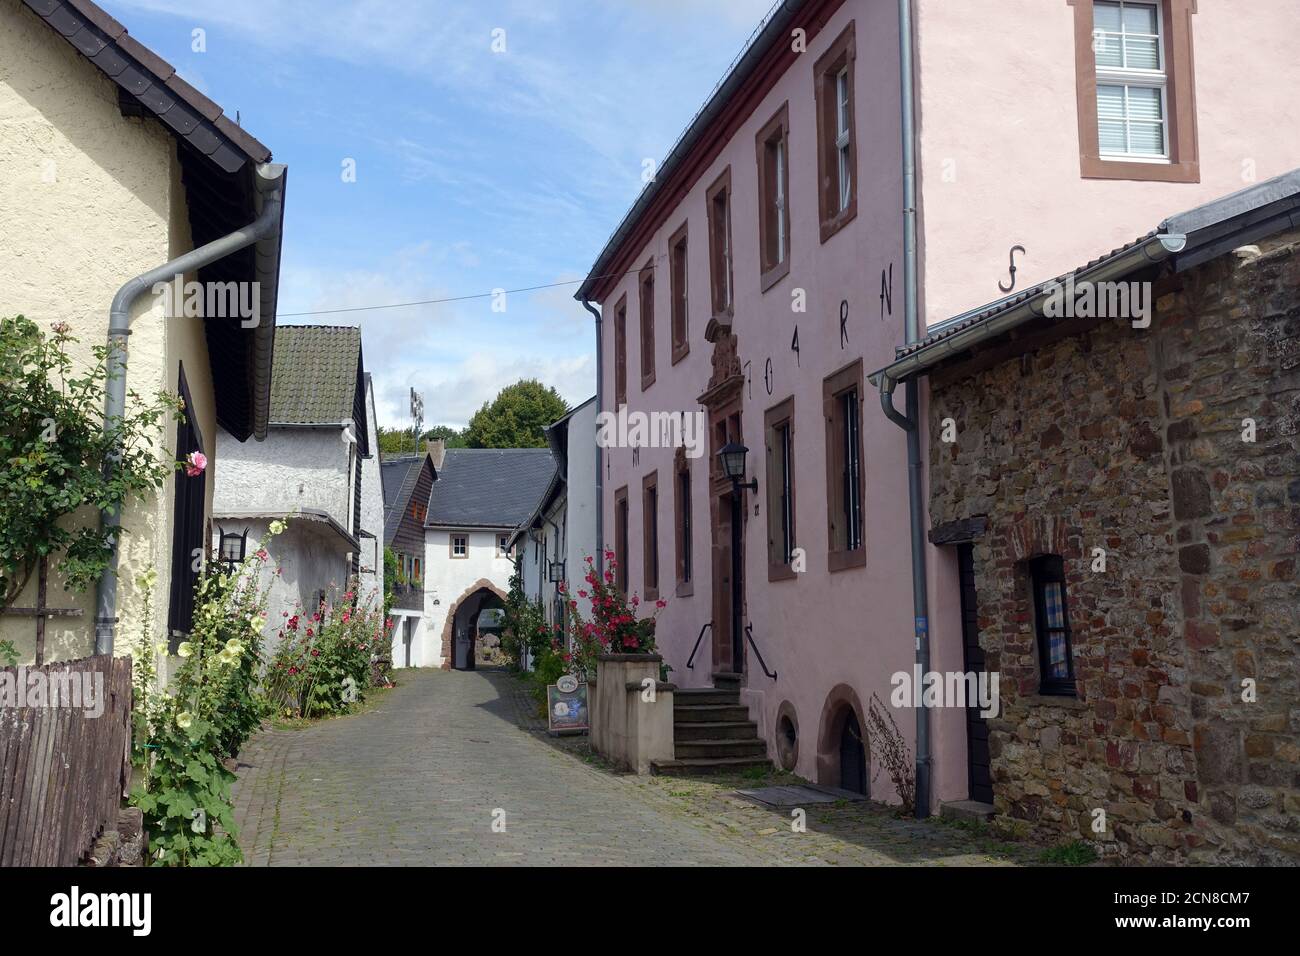 historical town centre Kronenburg Stock Photo